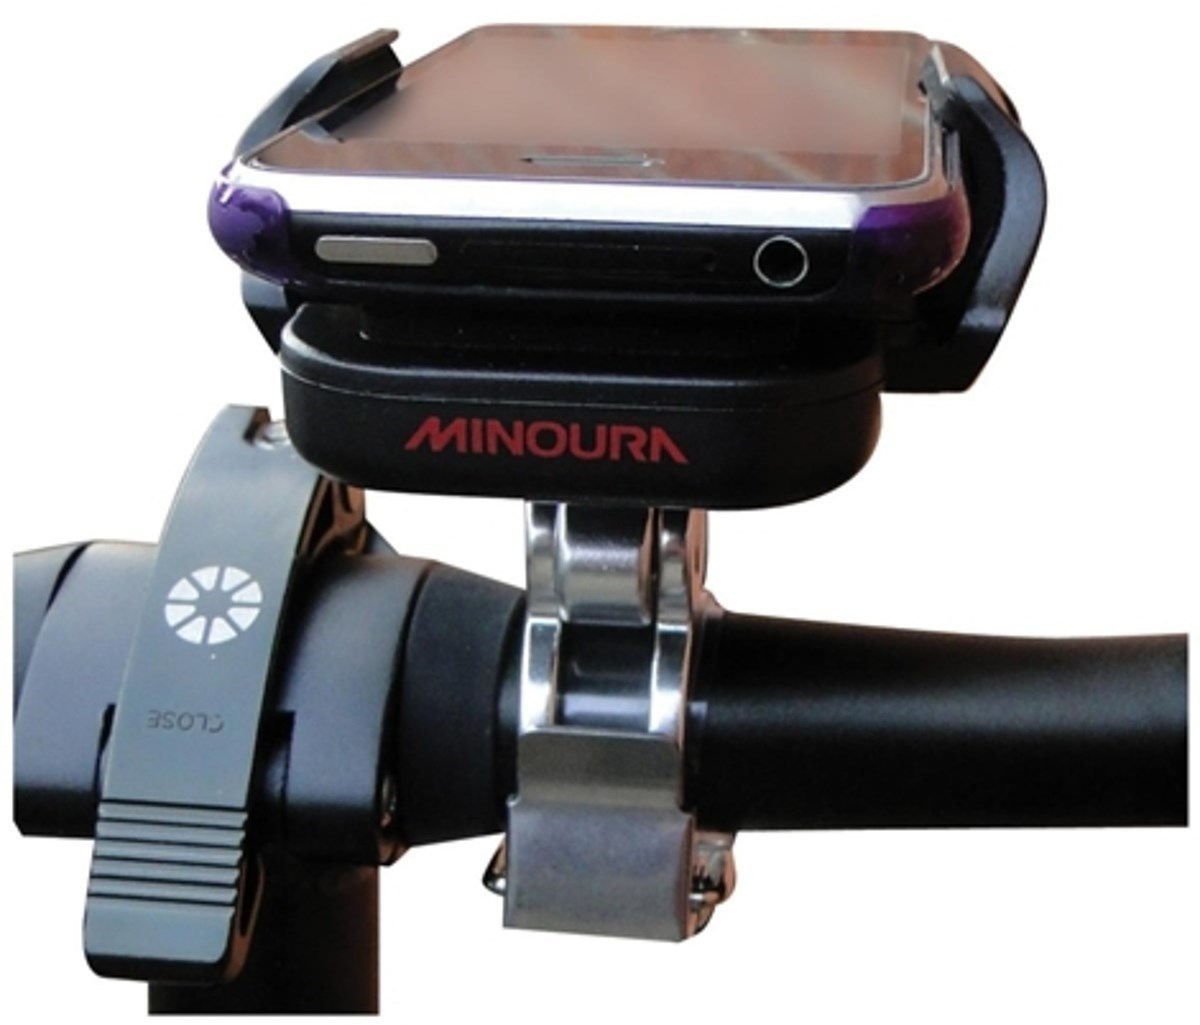 Minoura Smart Phone Holder product image